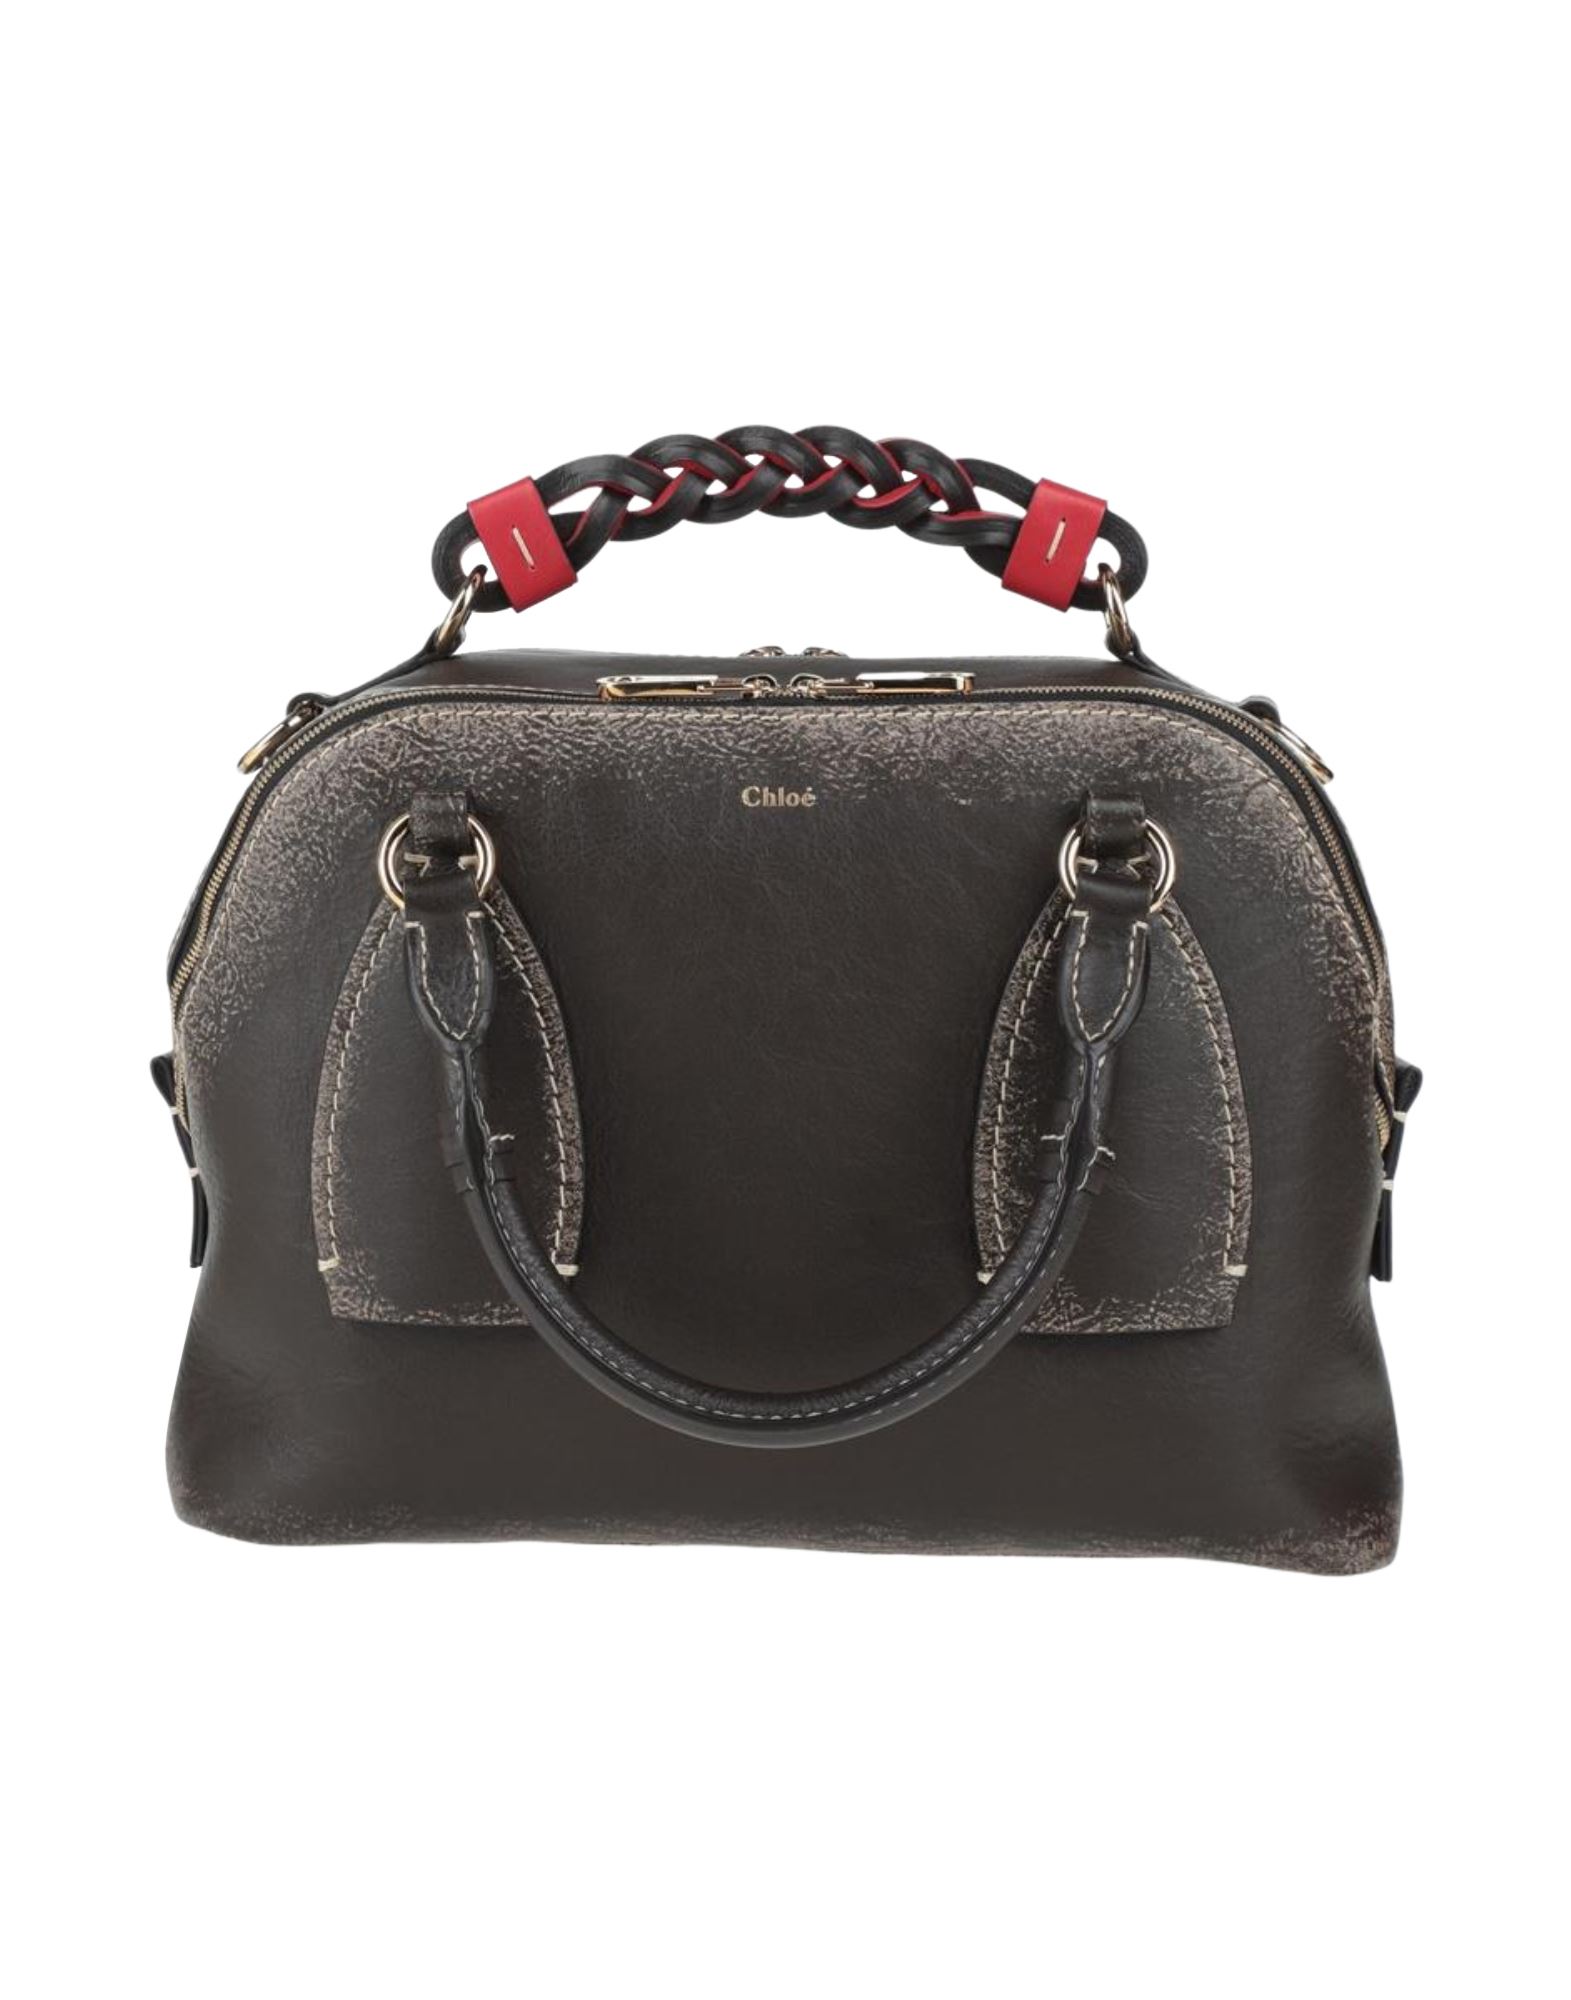 Chloé Handbags In Dark Brown